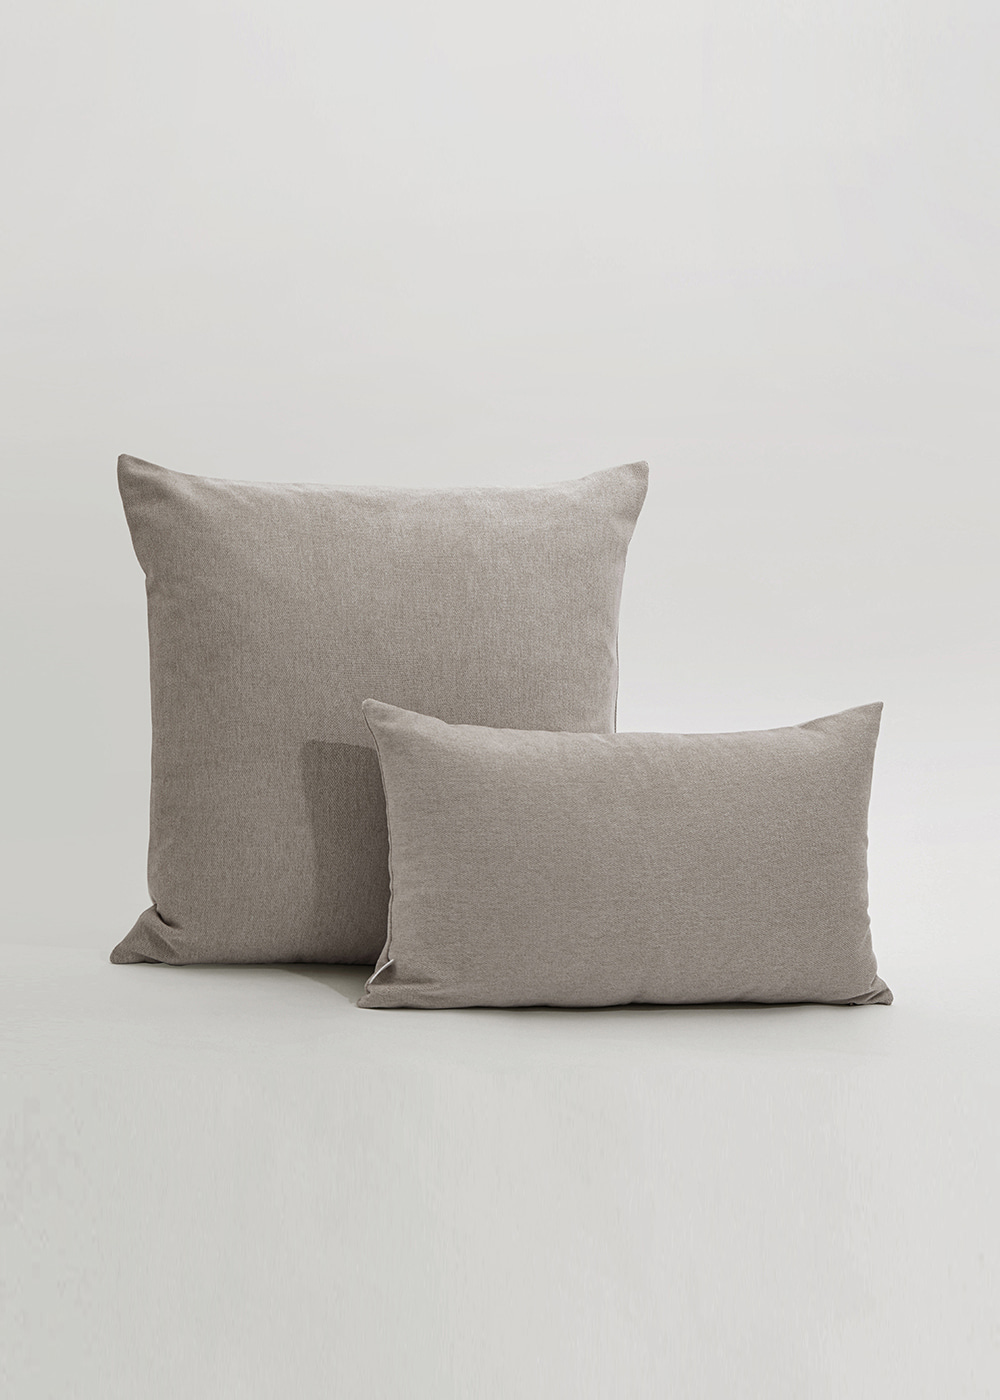 mont cushion gray